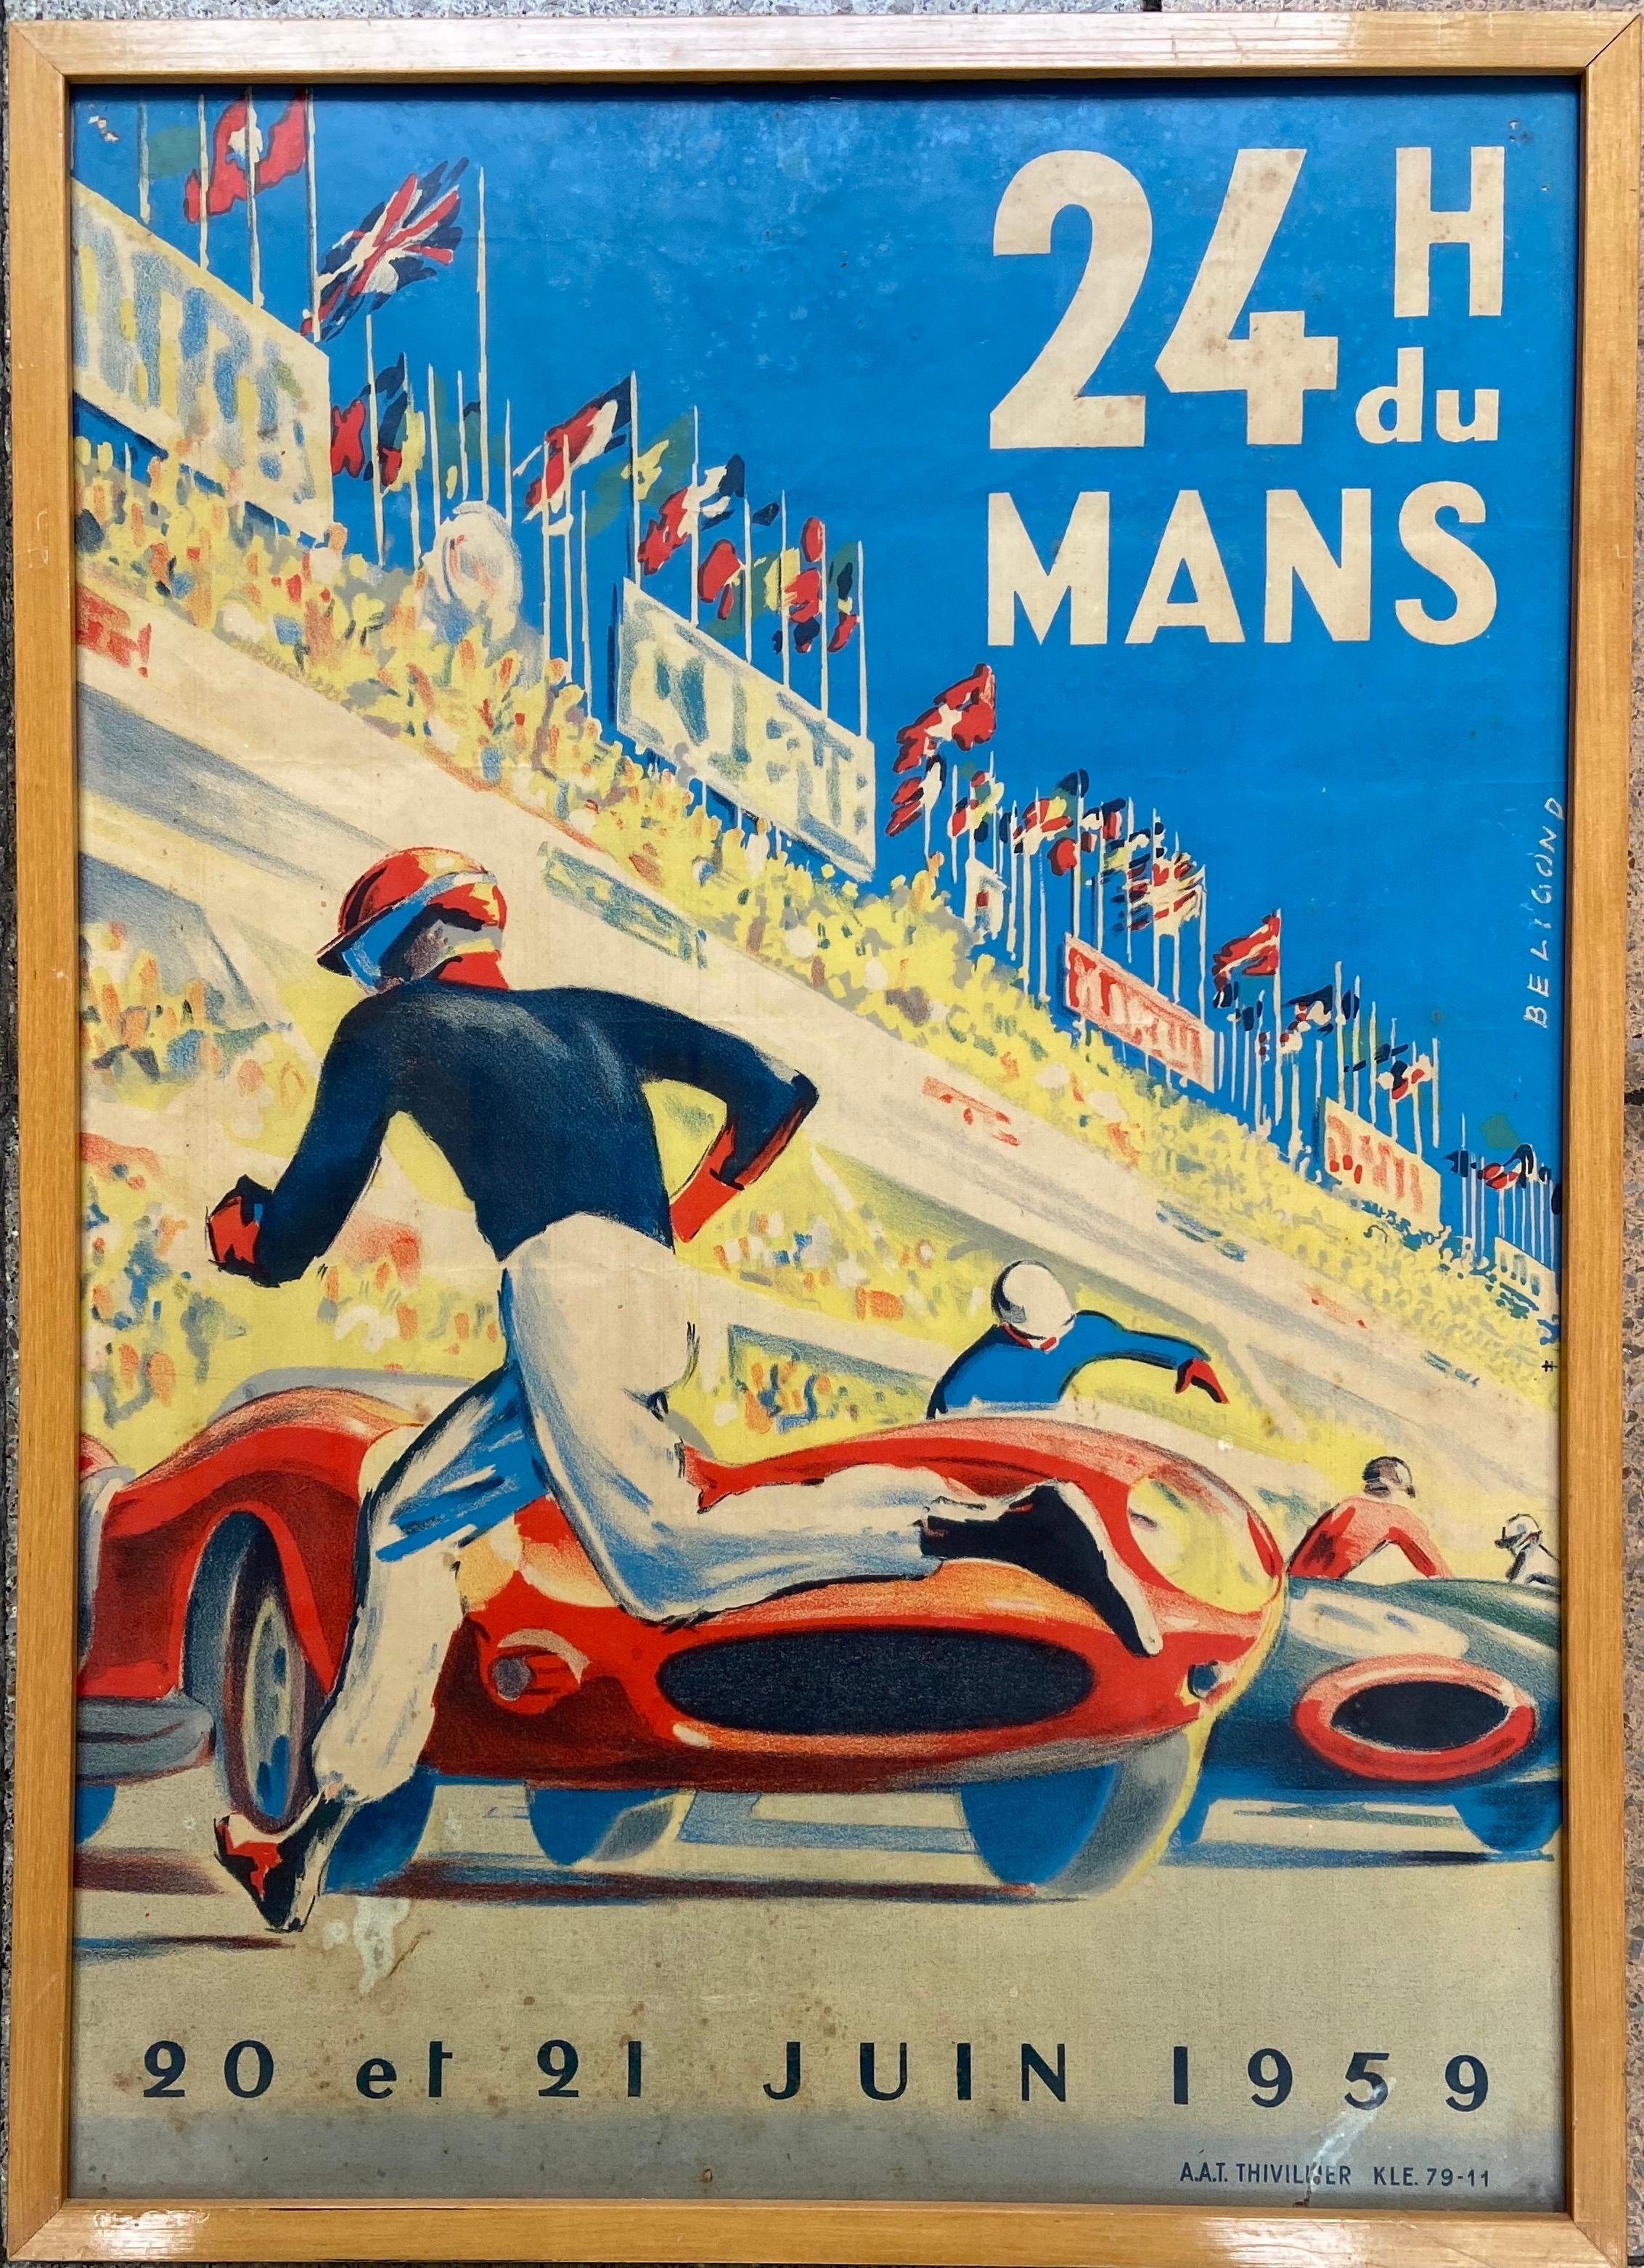 24h du Mans Poster - Michel Beligond  
1959 
Box  
41,5 x 67,5  
900 euros  